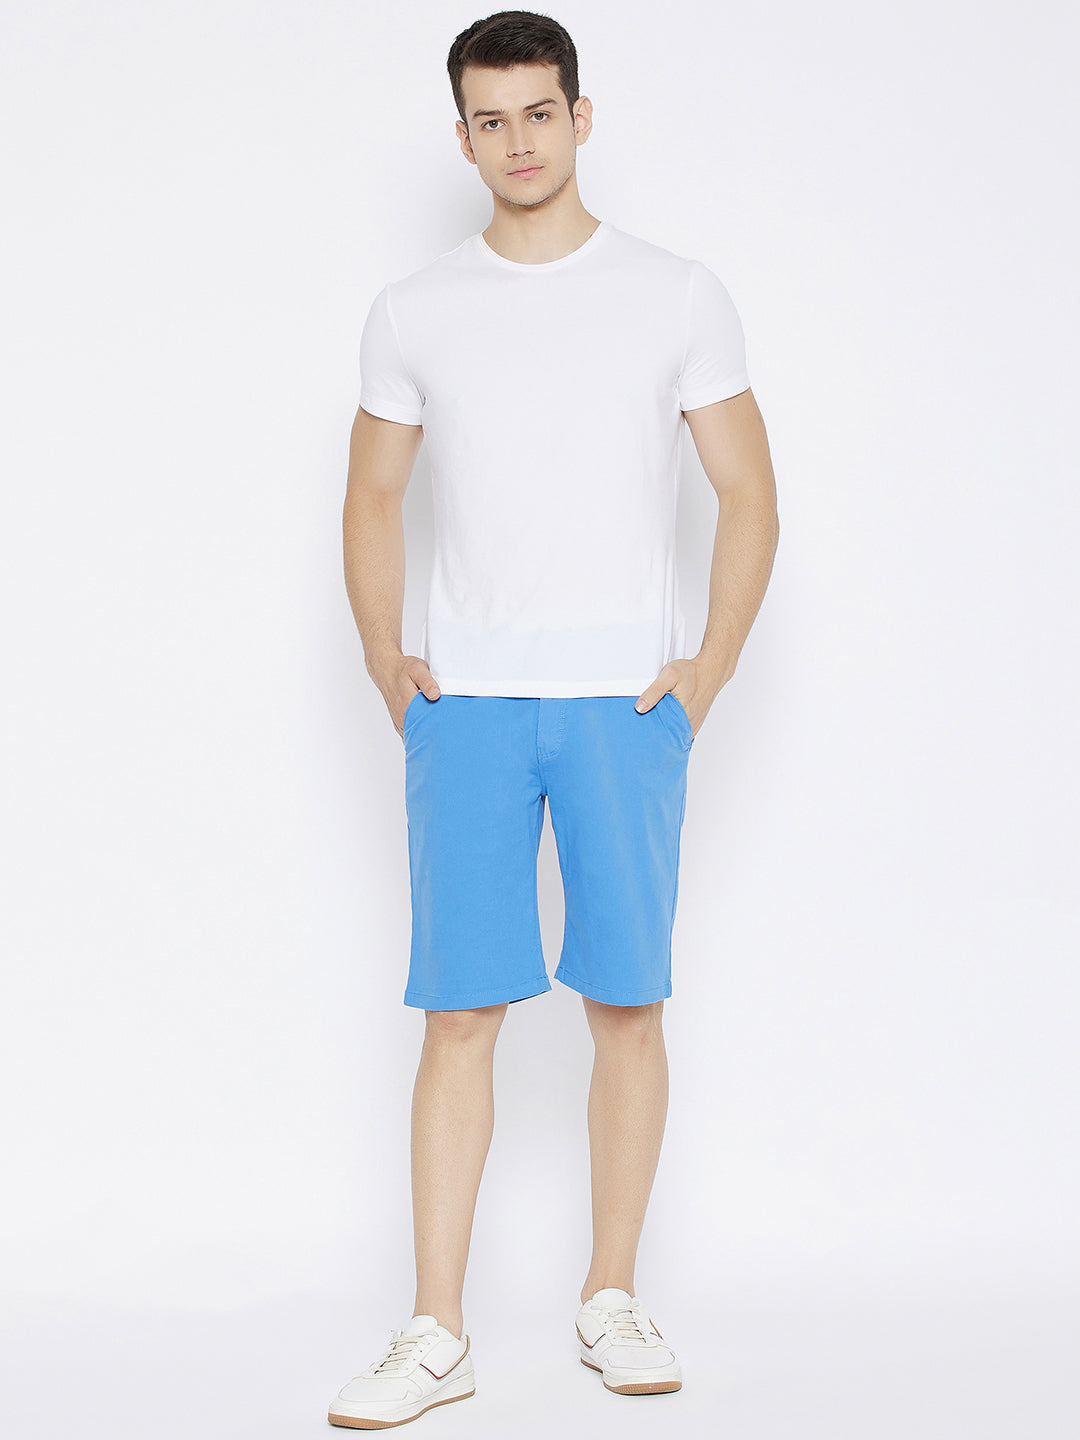 Blue Slim Fit Shorts - Men Shorts